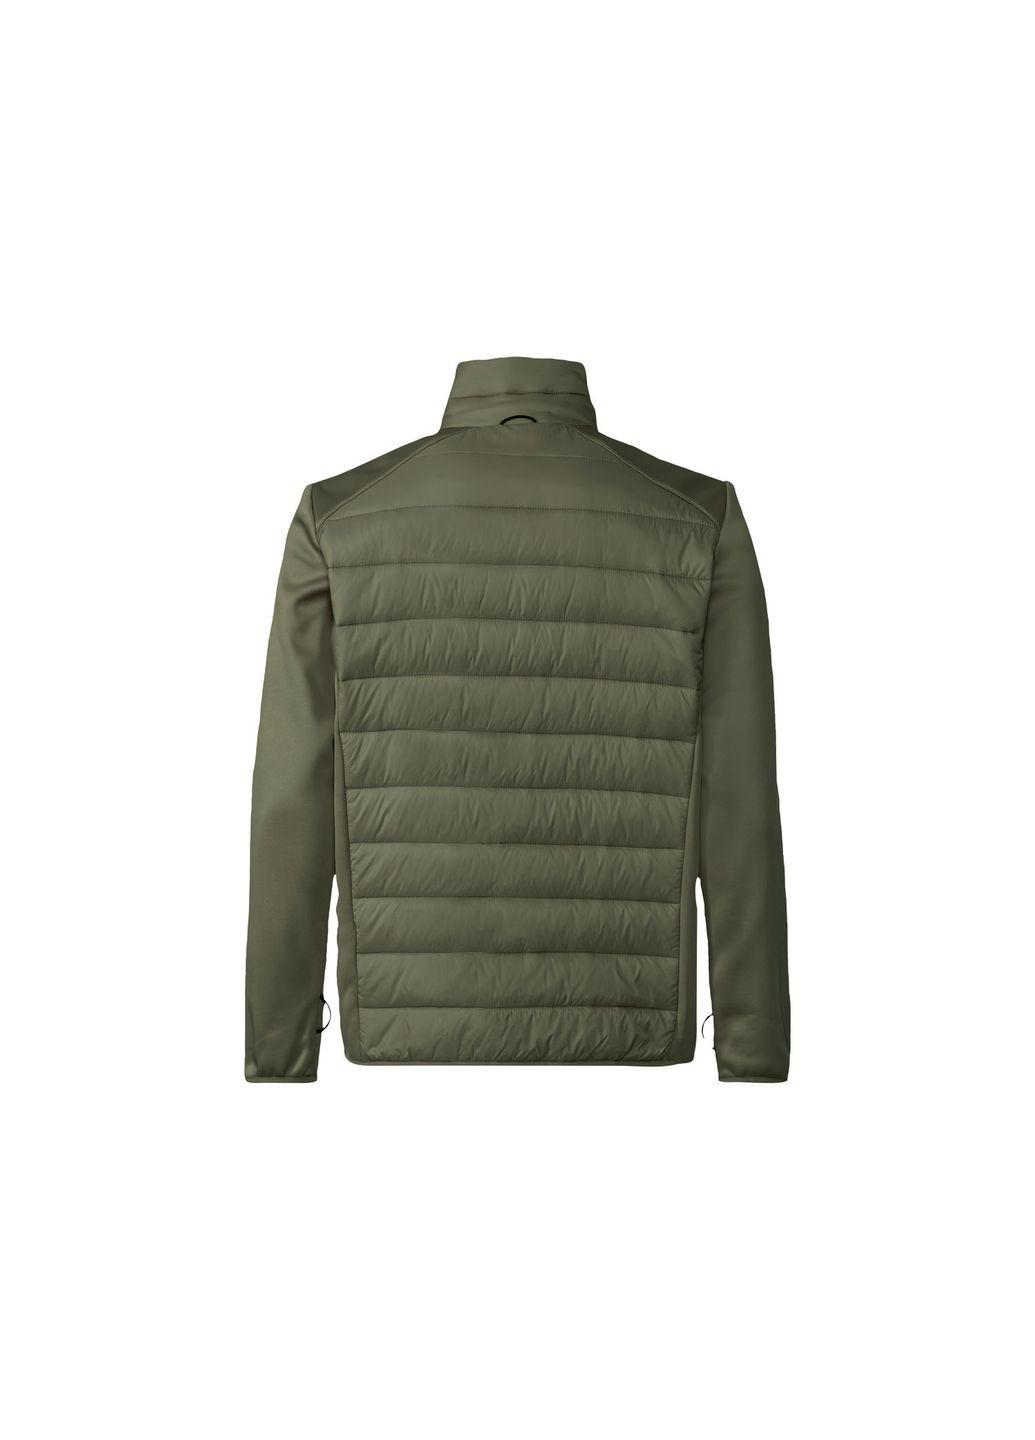 Оливковая (хаки) демисезонная куртка демисезонная комбинированная softshell / софтшелл для мужчины 498774 ROCKTRAIL